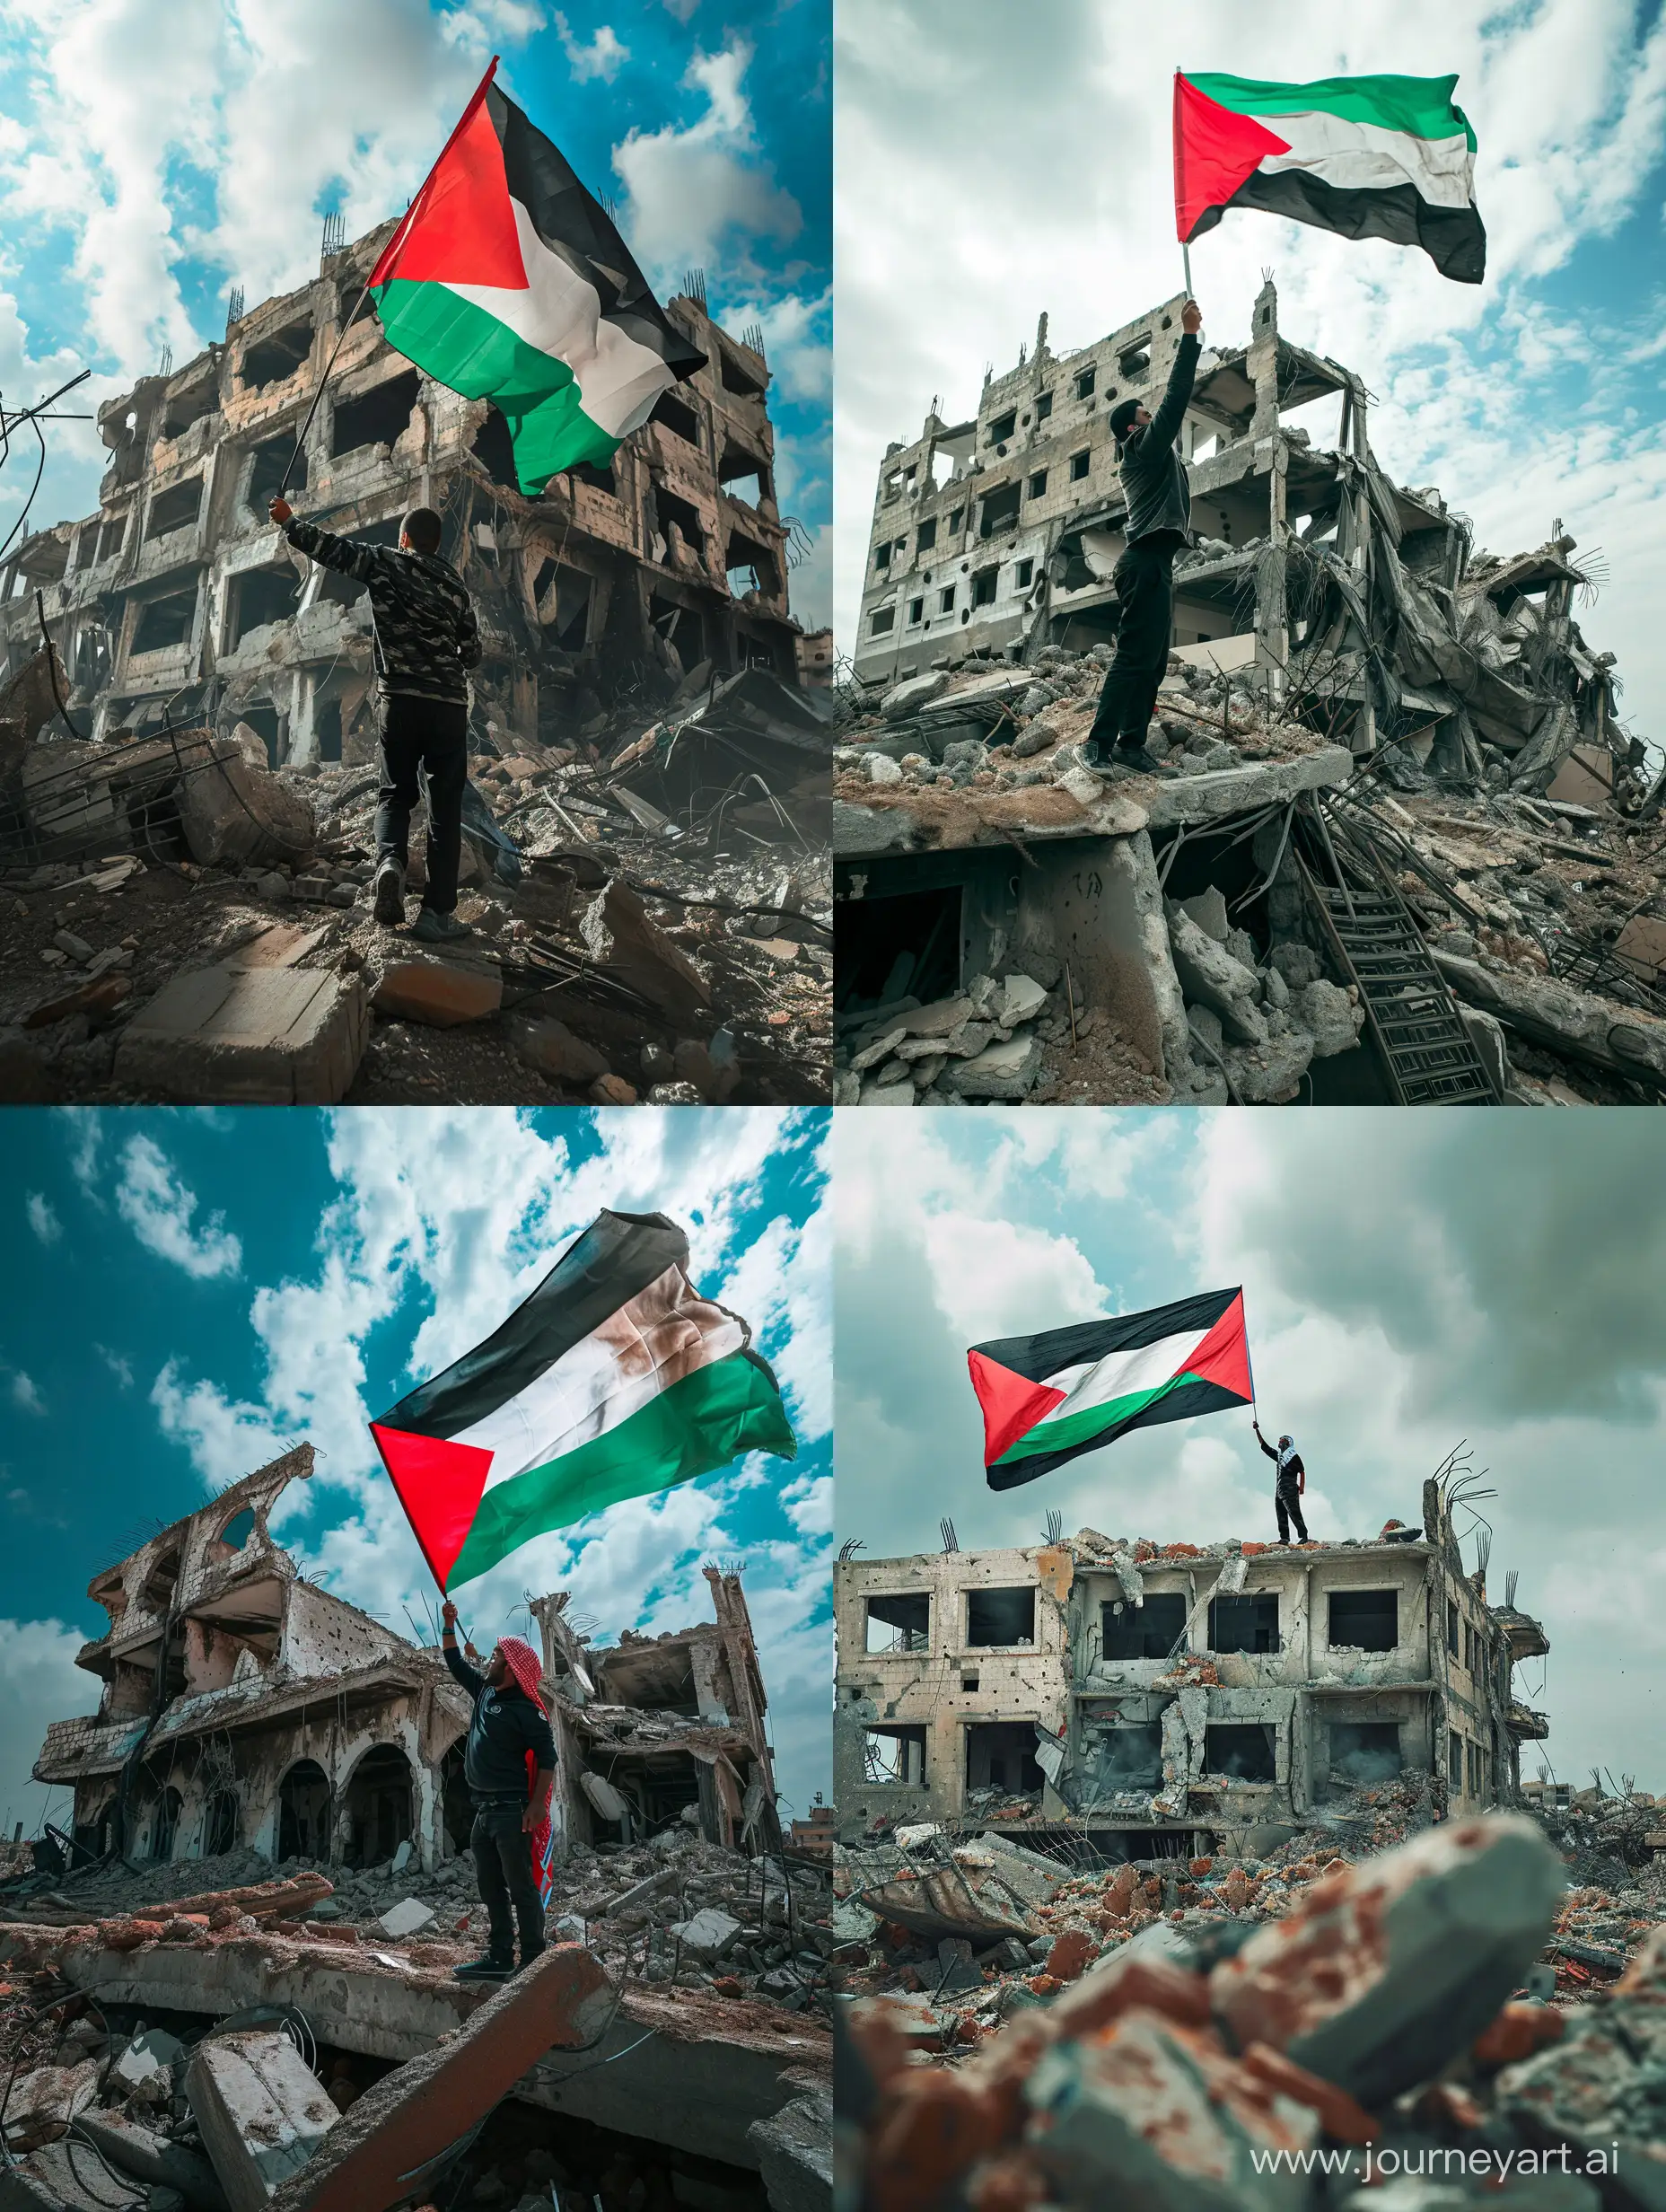 Aan-Hj-Arshad-Raises-the-Flag-of-Palestine-Amidst-Ruins